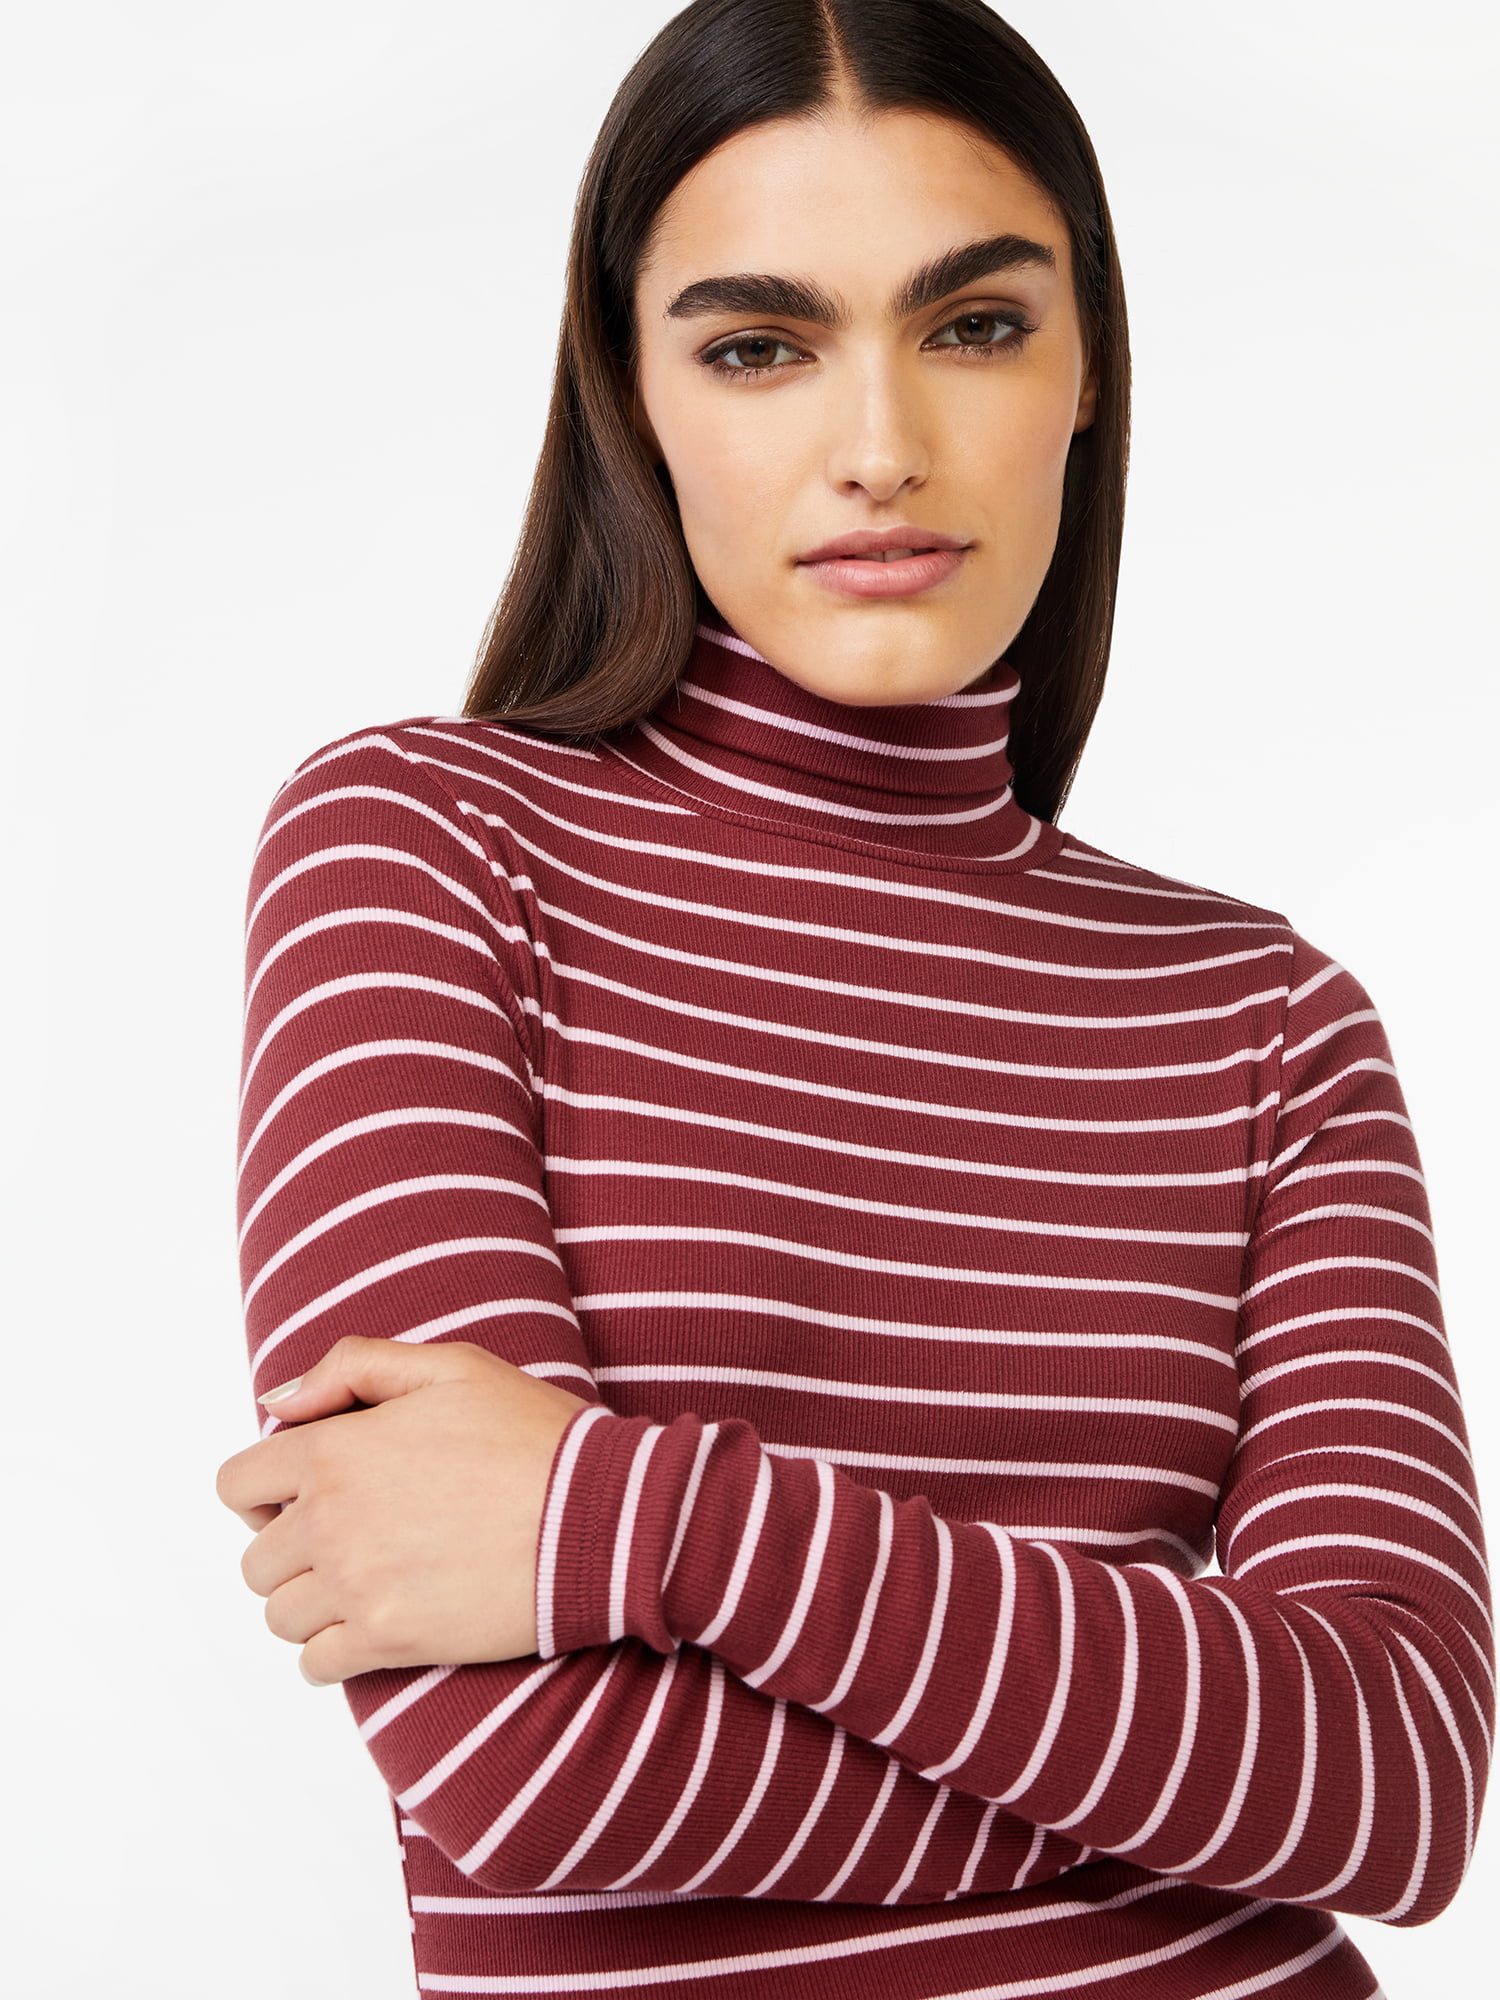 Women's burgundy kid cashmere turtleneck sweater